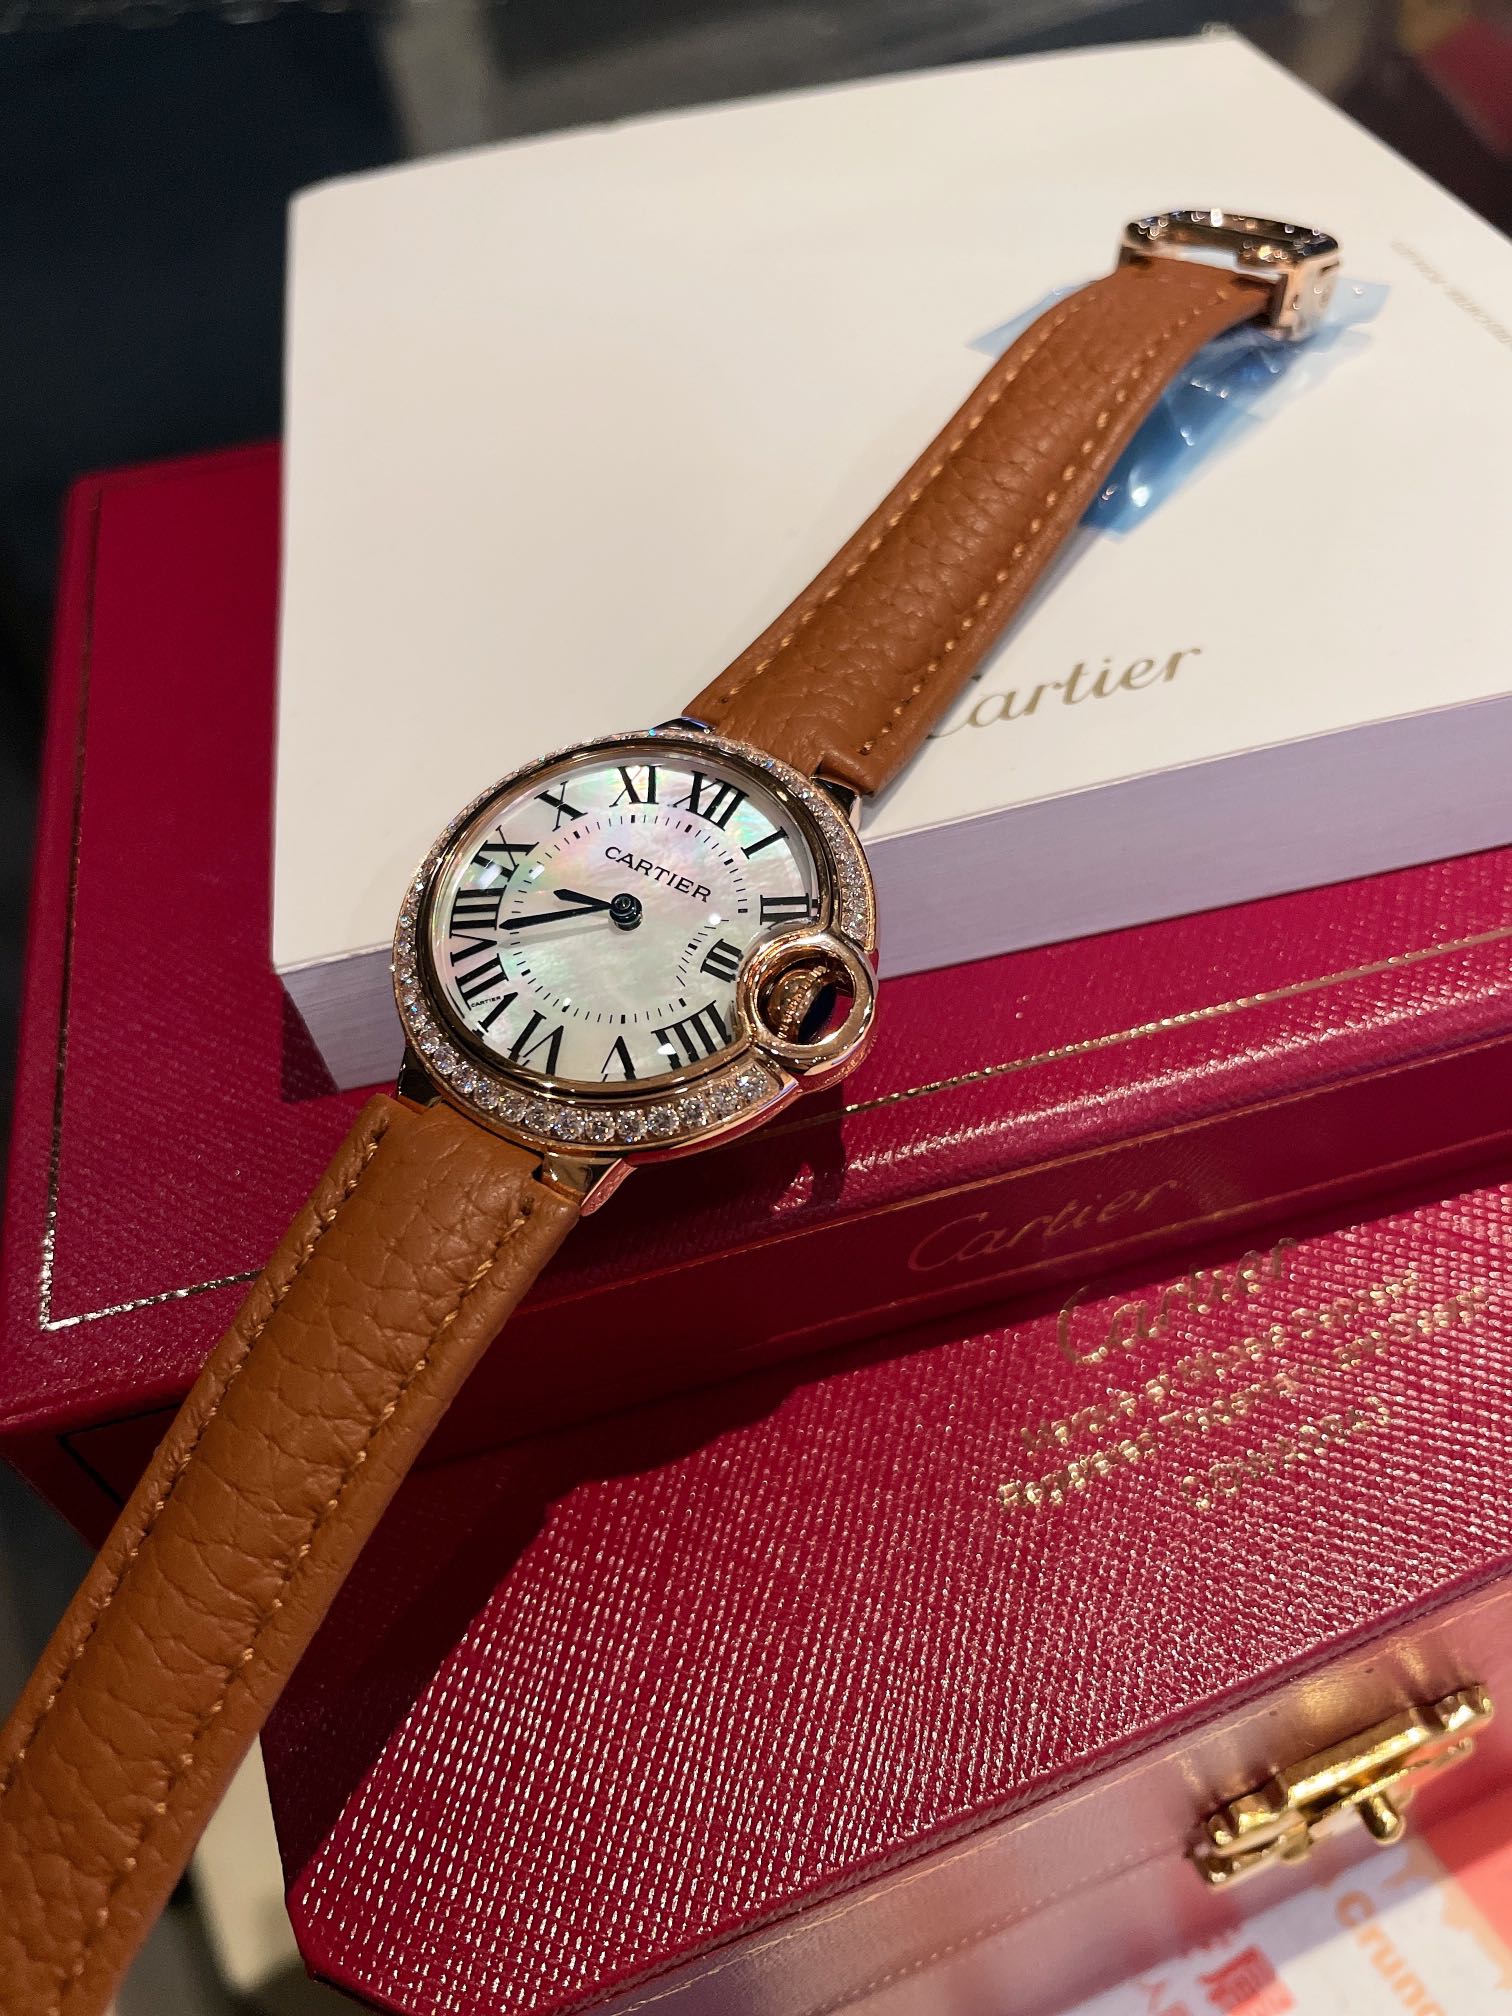 CARTIERカルティエ 腕時計 並行輸入コピー フランス 薄い腕時計 レザー 水晶ダイヤモンド 新商品 限定品 ブラウン_7